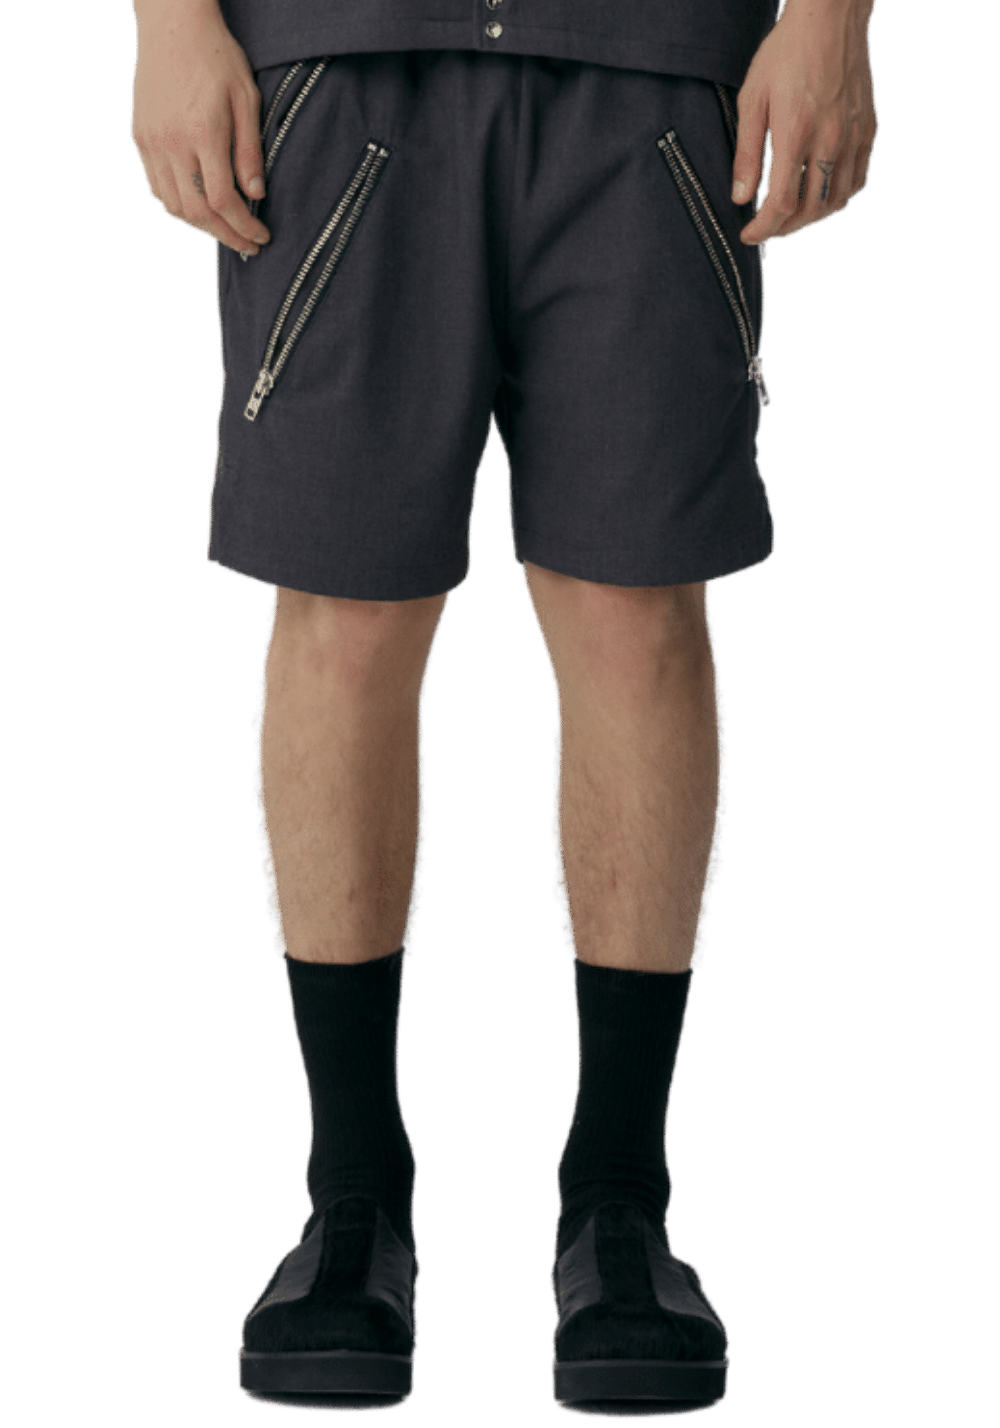 Double Zipped Shorts - PSYLOS 1, Double Zipped Shorts, Shorts, The Last Redemption, PSYLOS 1